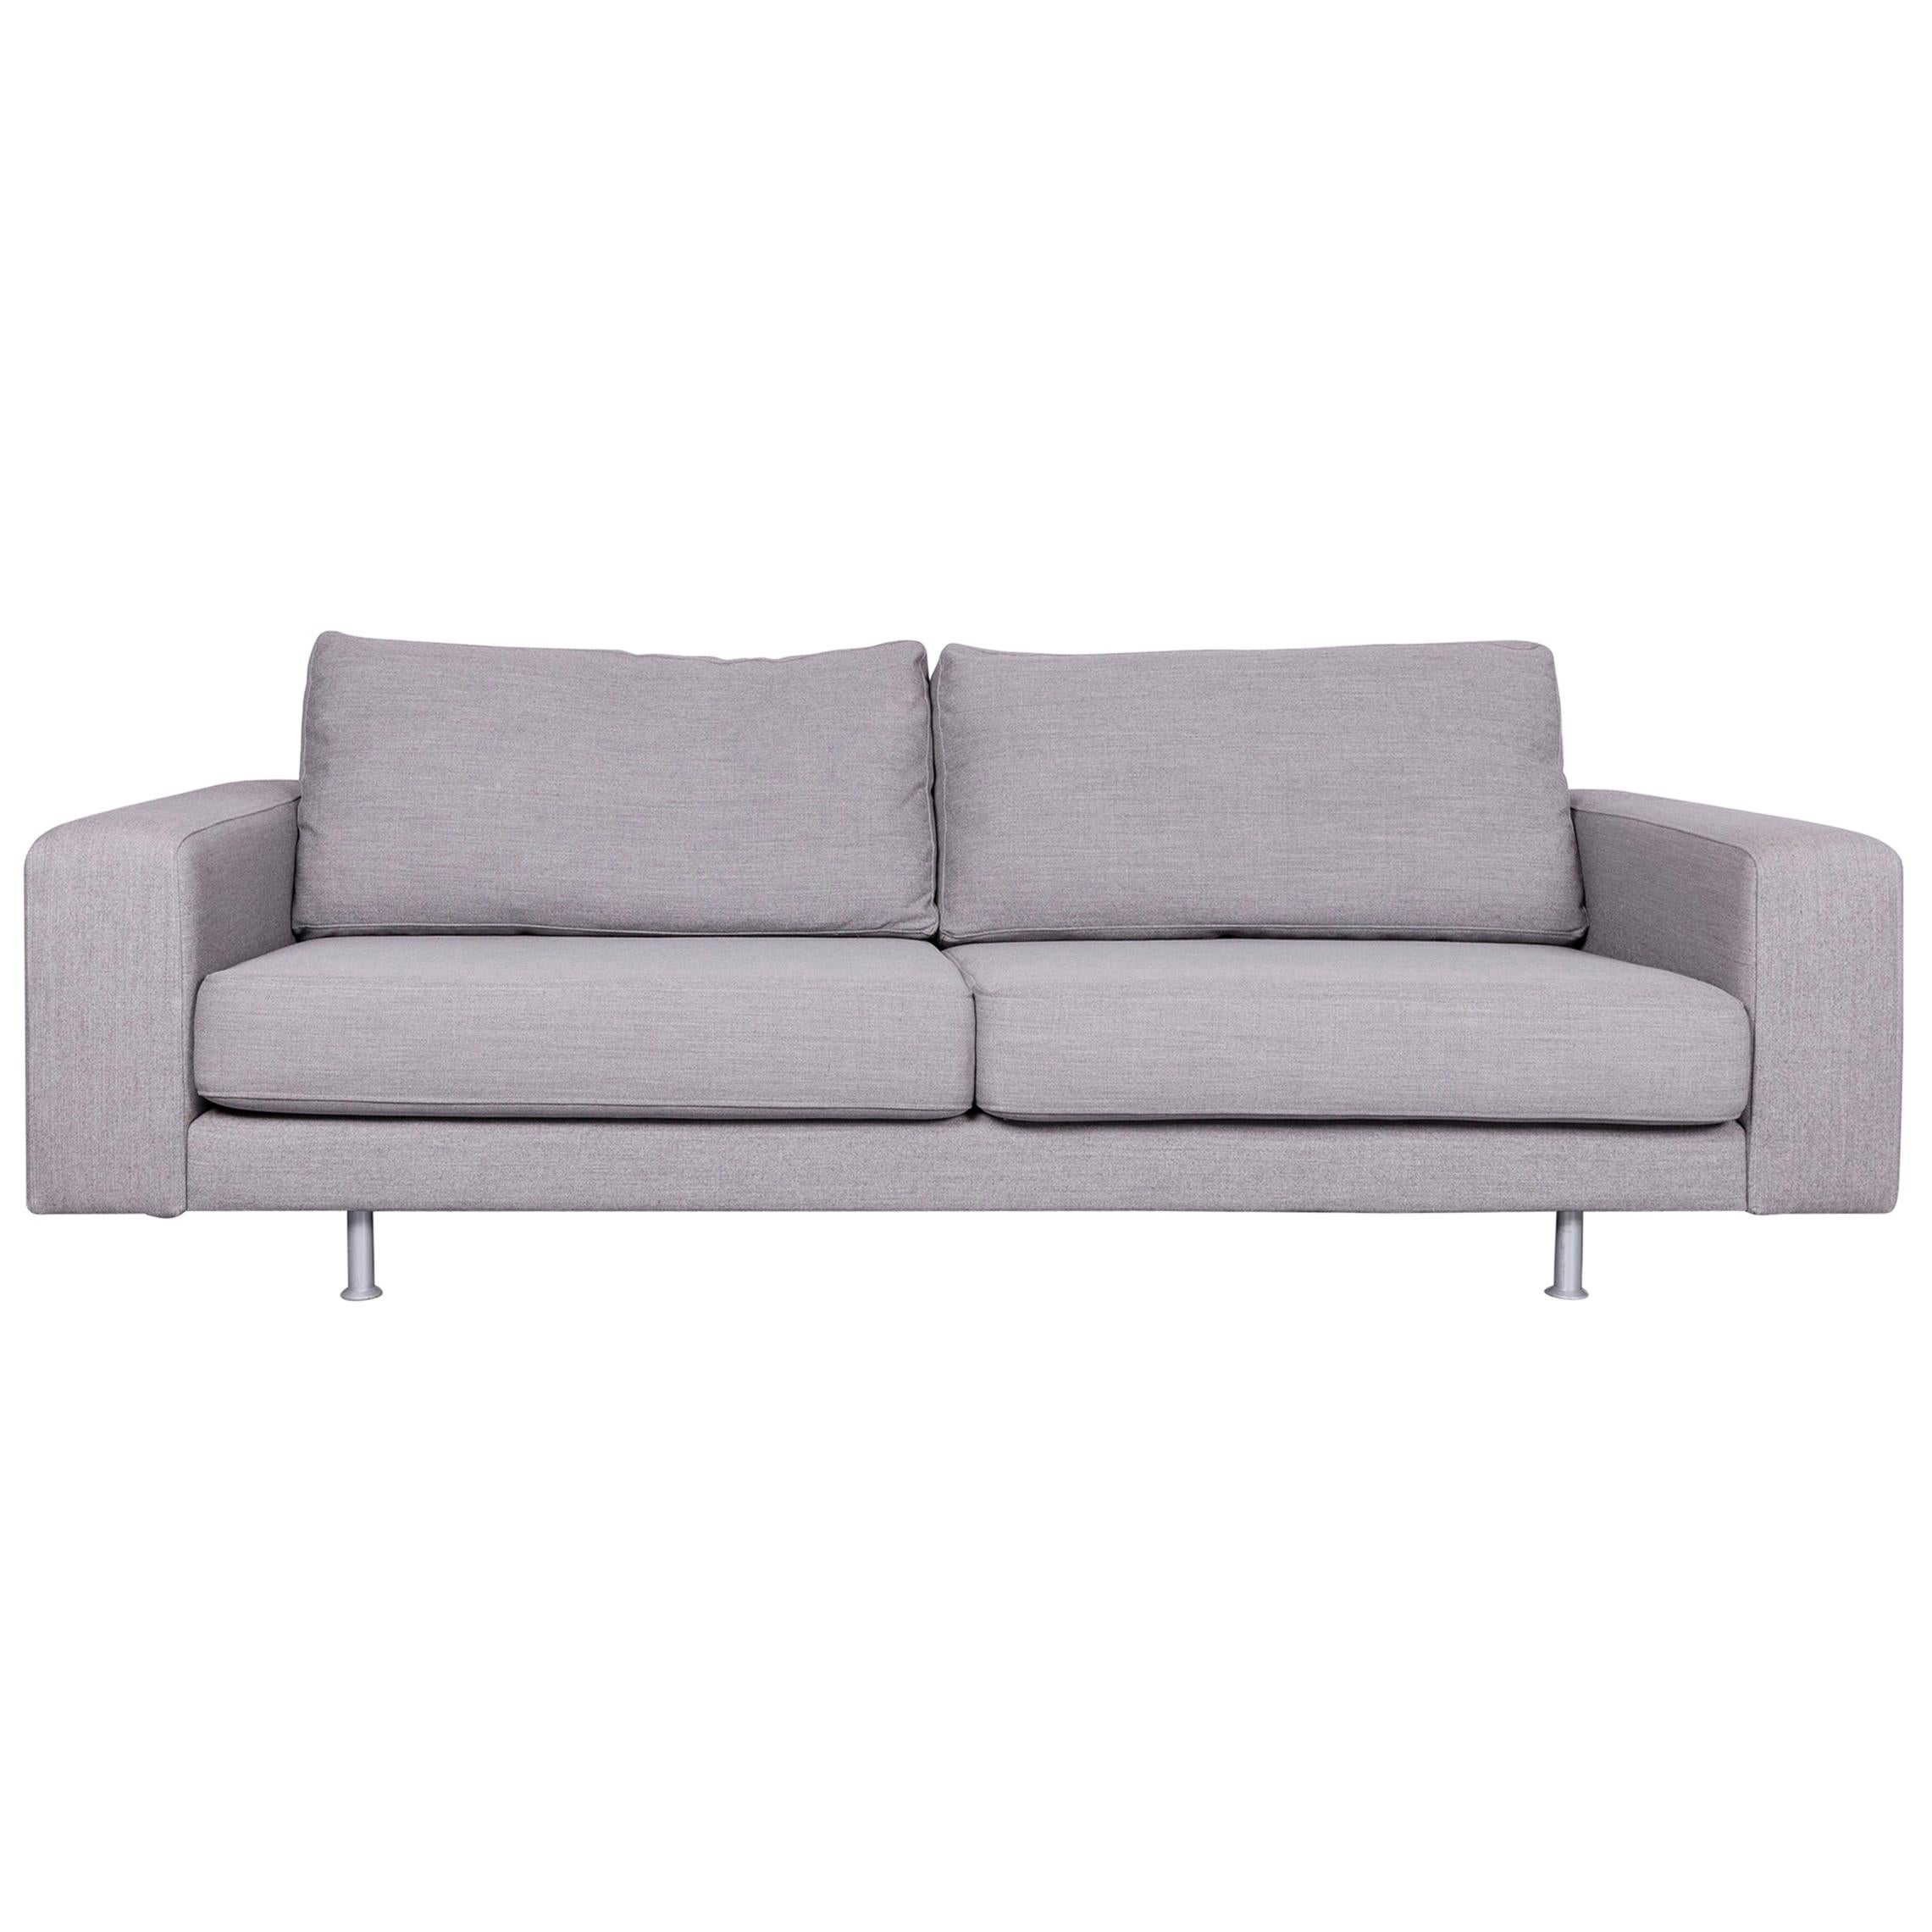 Pro Seda Designer Fabric Sofa Grey Sofa Couch Modern For Sale